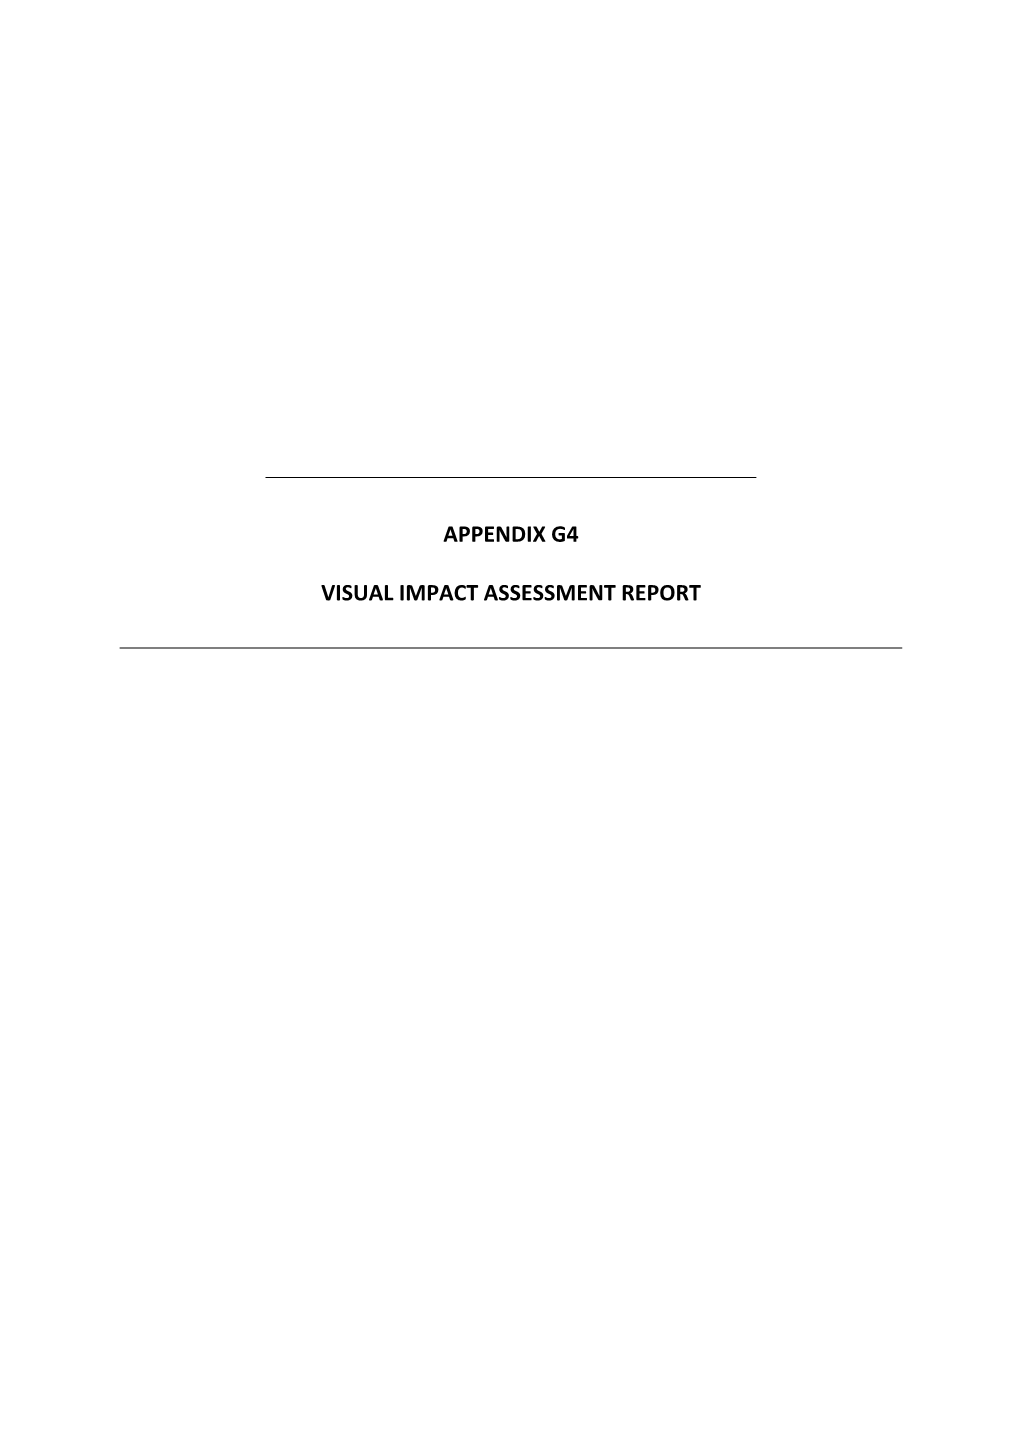 Appendix G4 Visual Impact Assessment Report